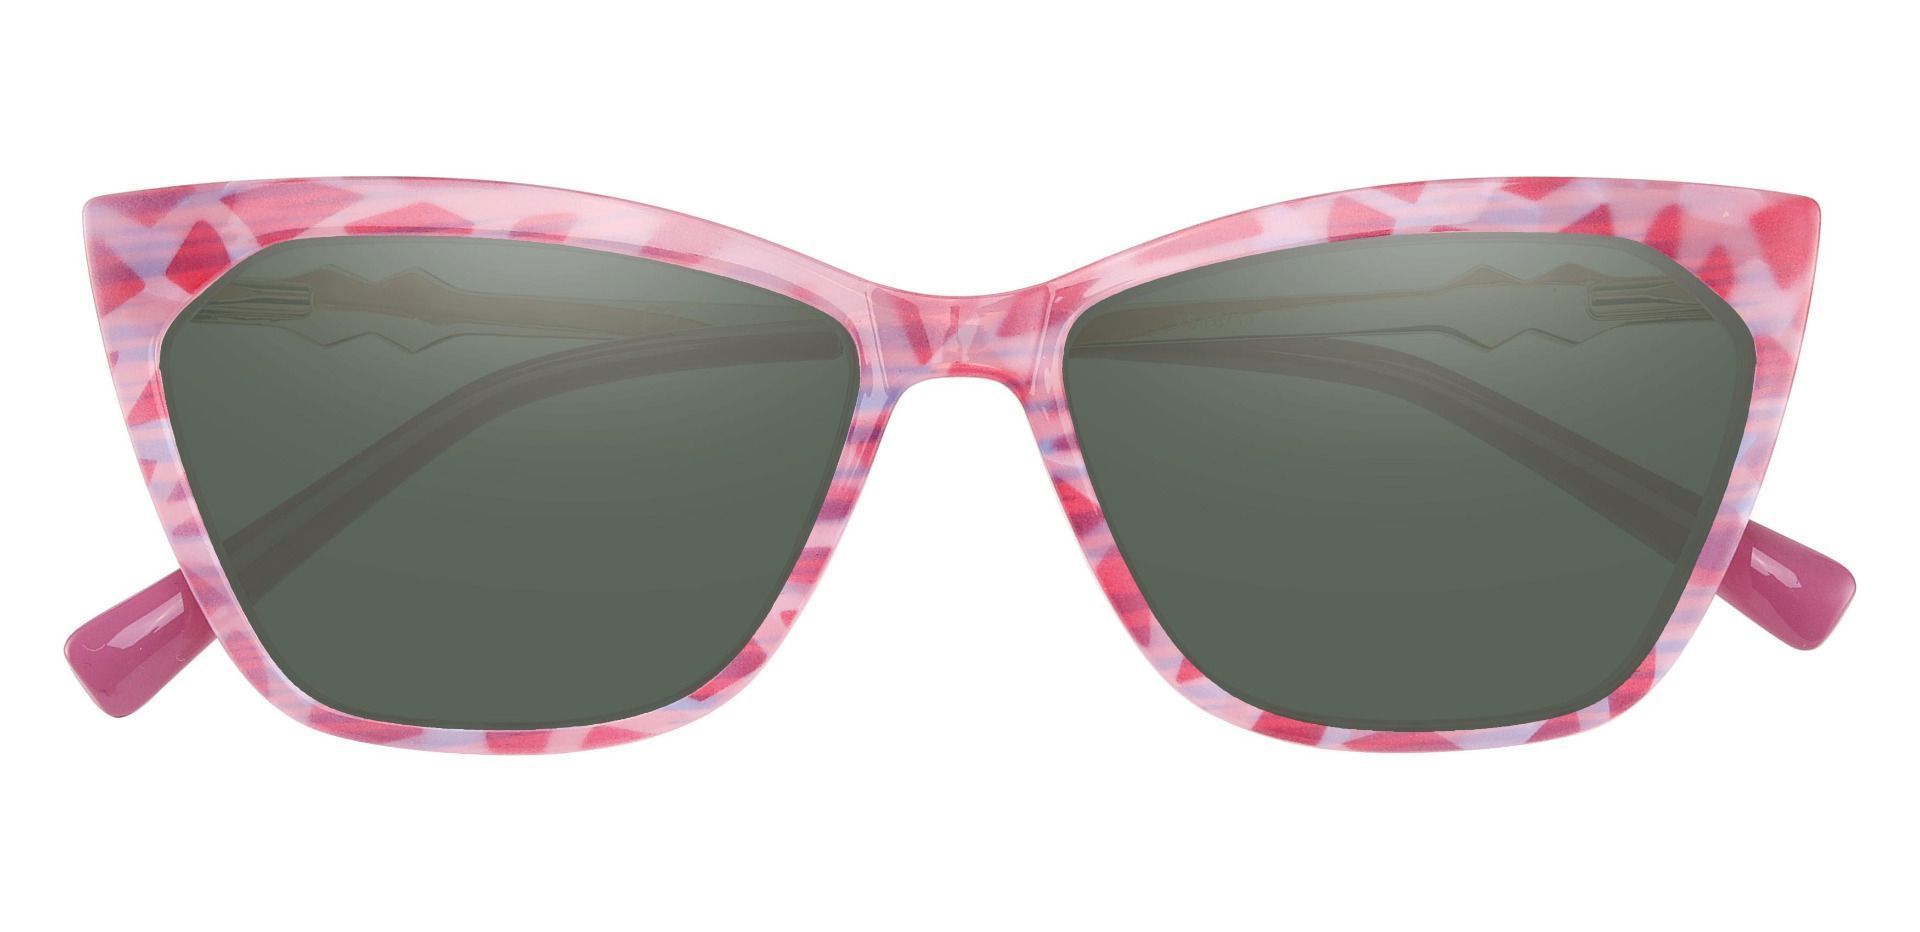 Addison Cat Eye Prescription Sunglasses - Pink Frame With Green Lenses